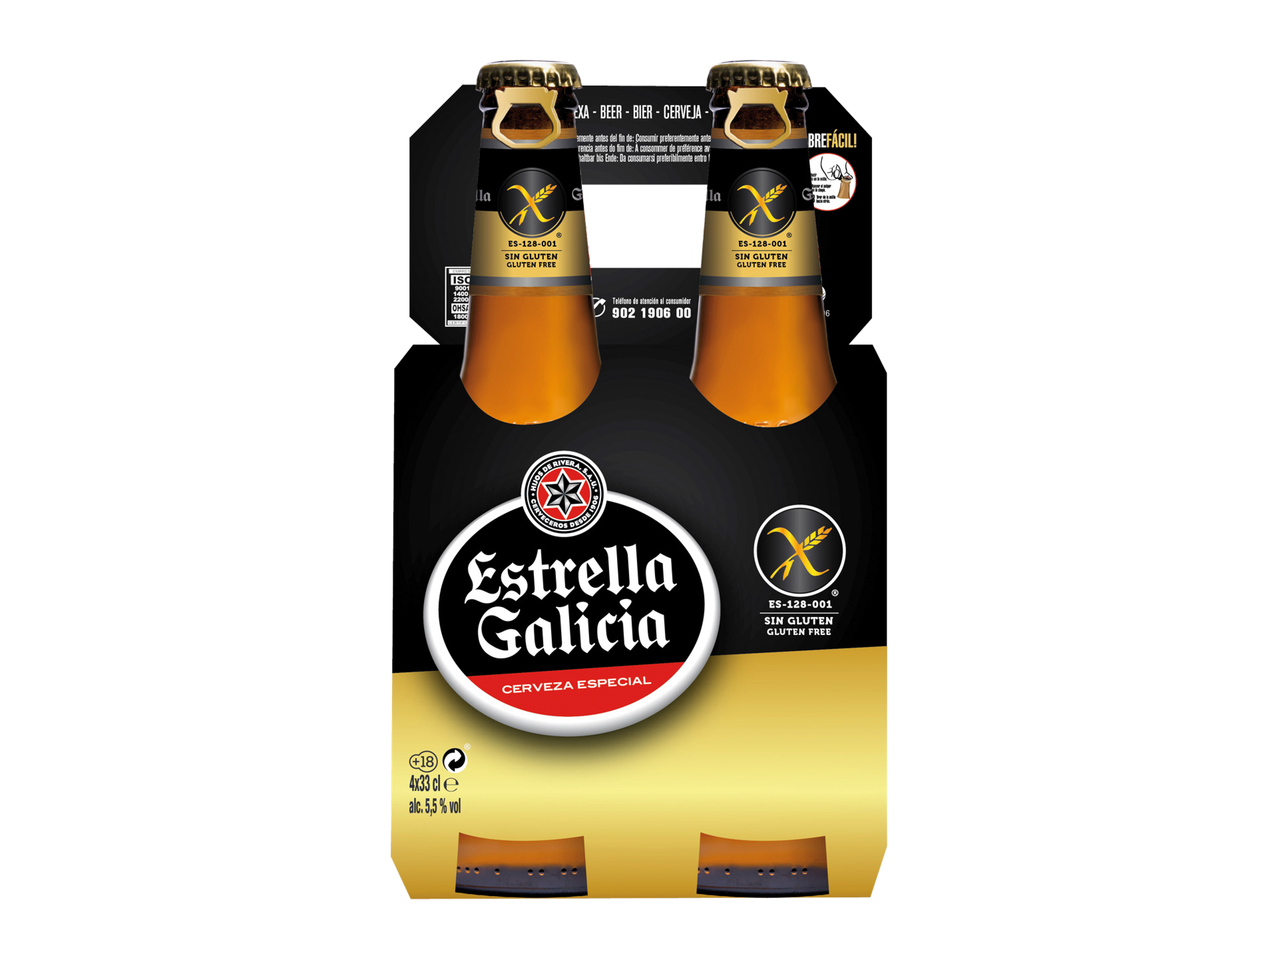 Estrella Galicia sans gluten